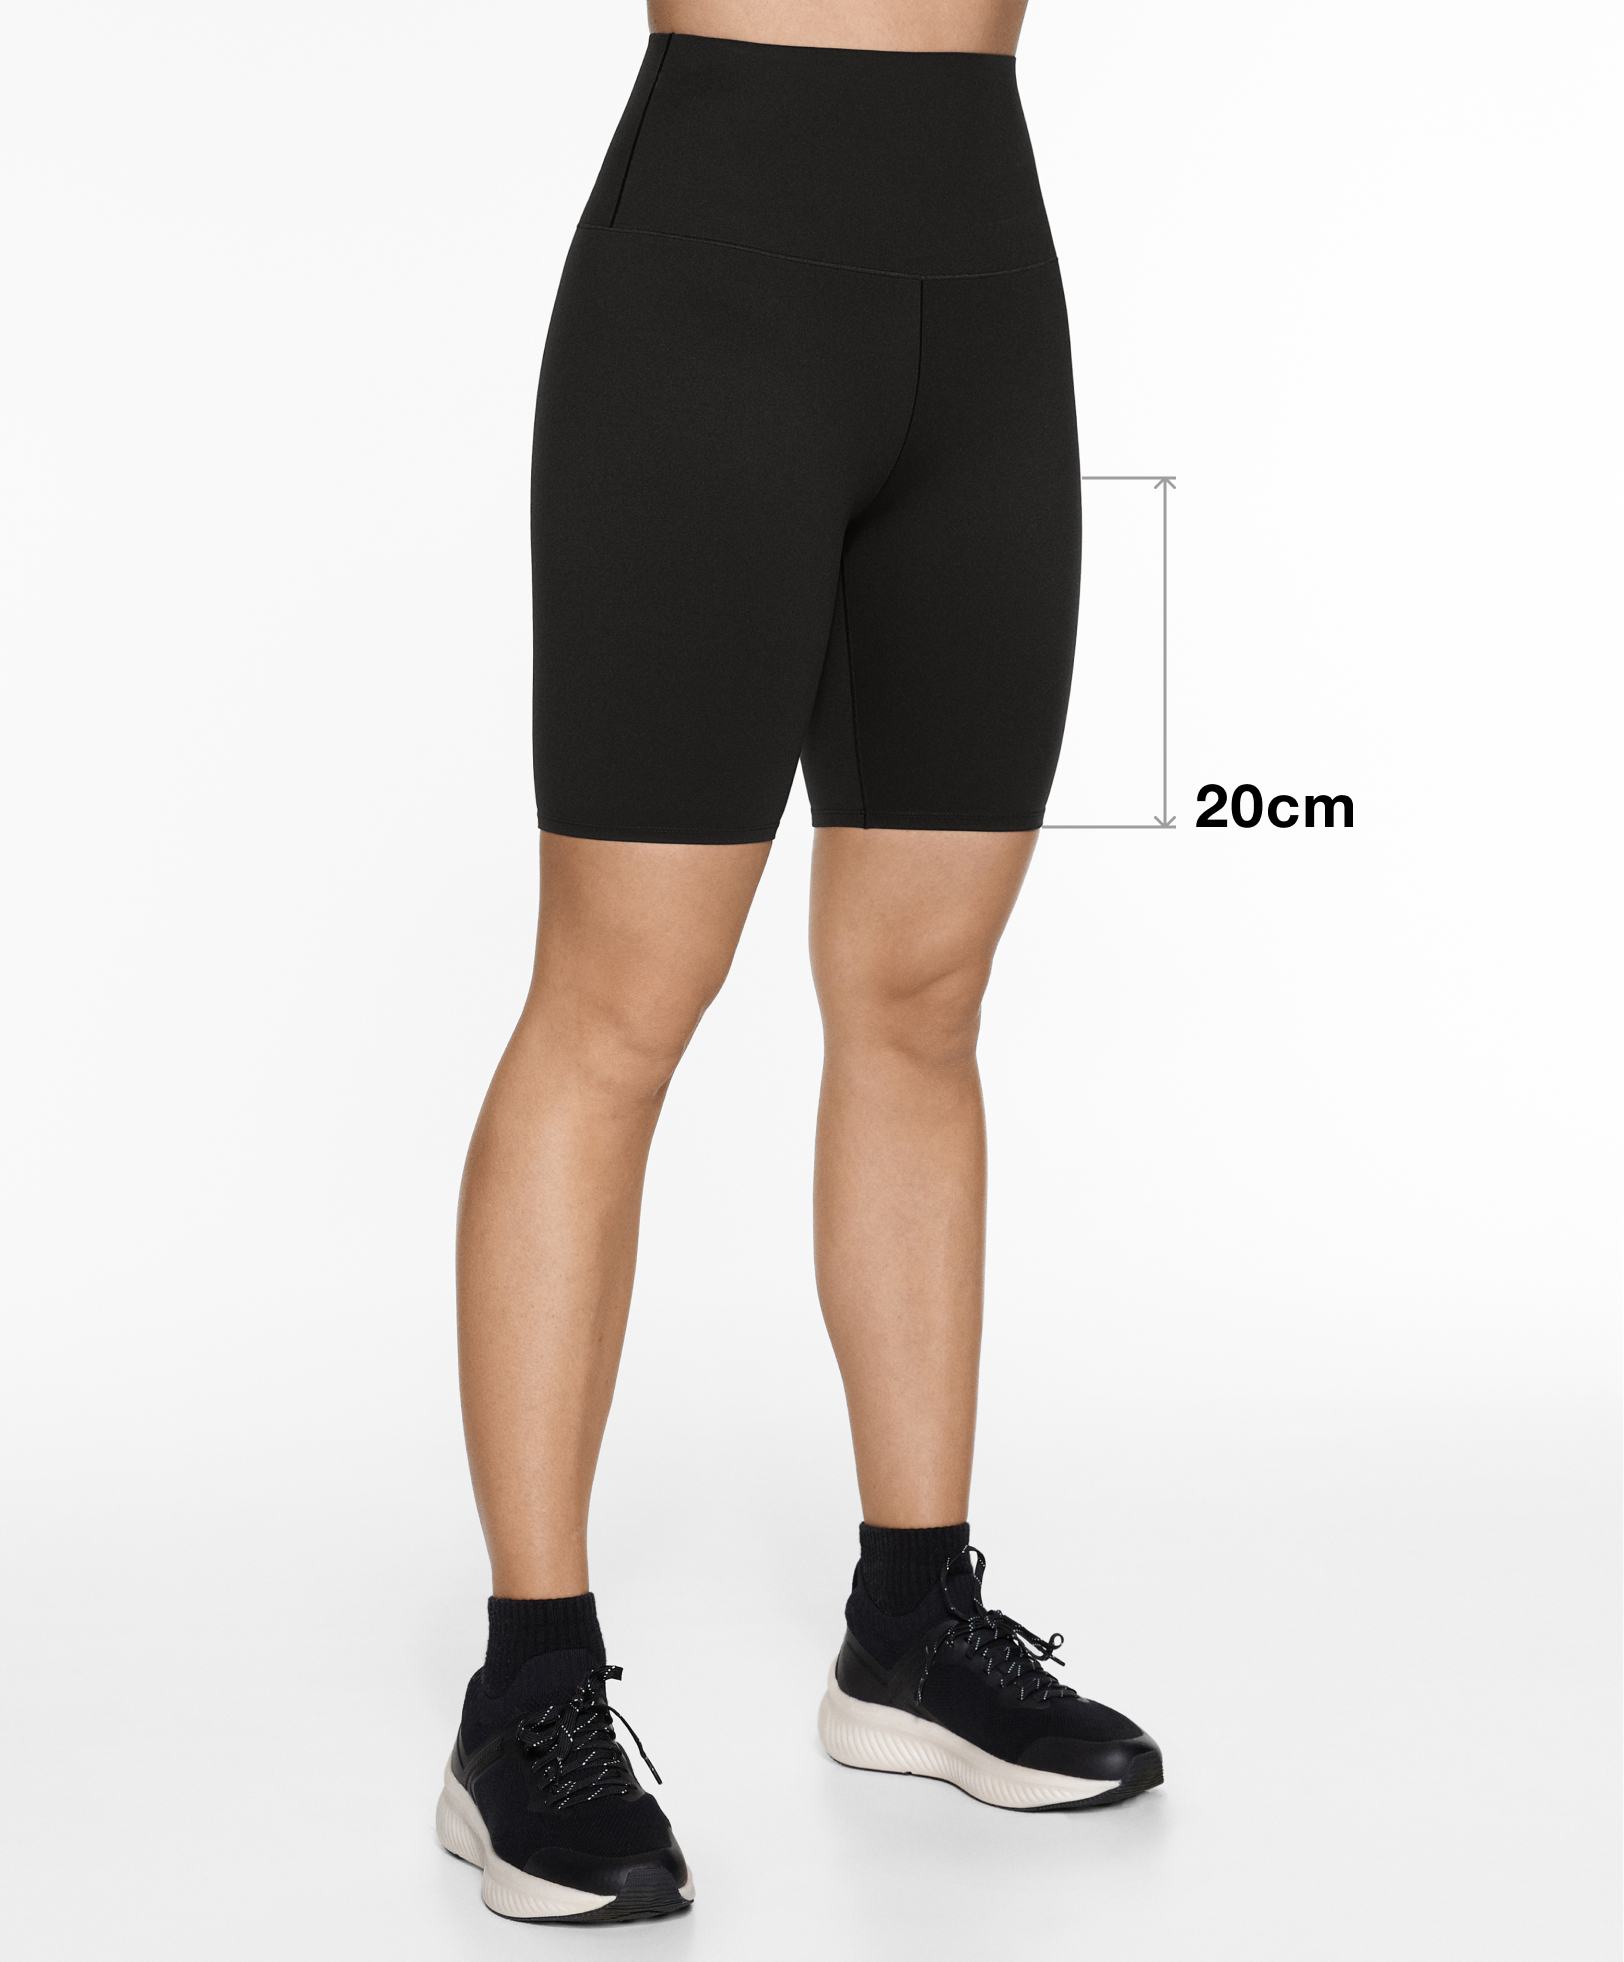 Perfect-adapt high-rise 20cm cycle leggings